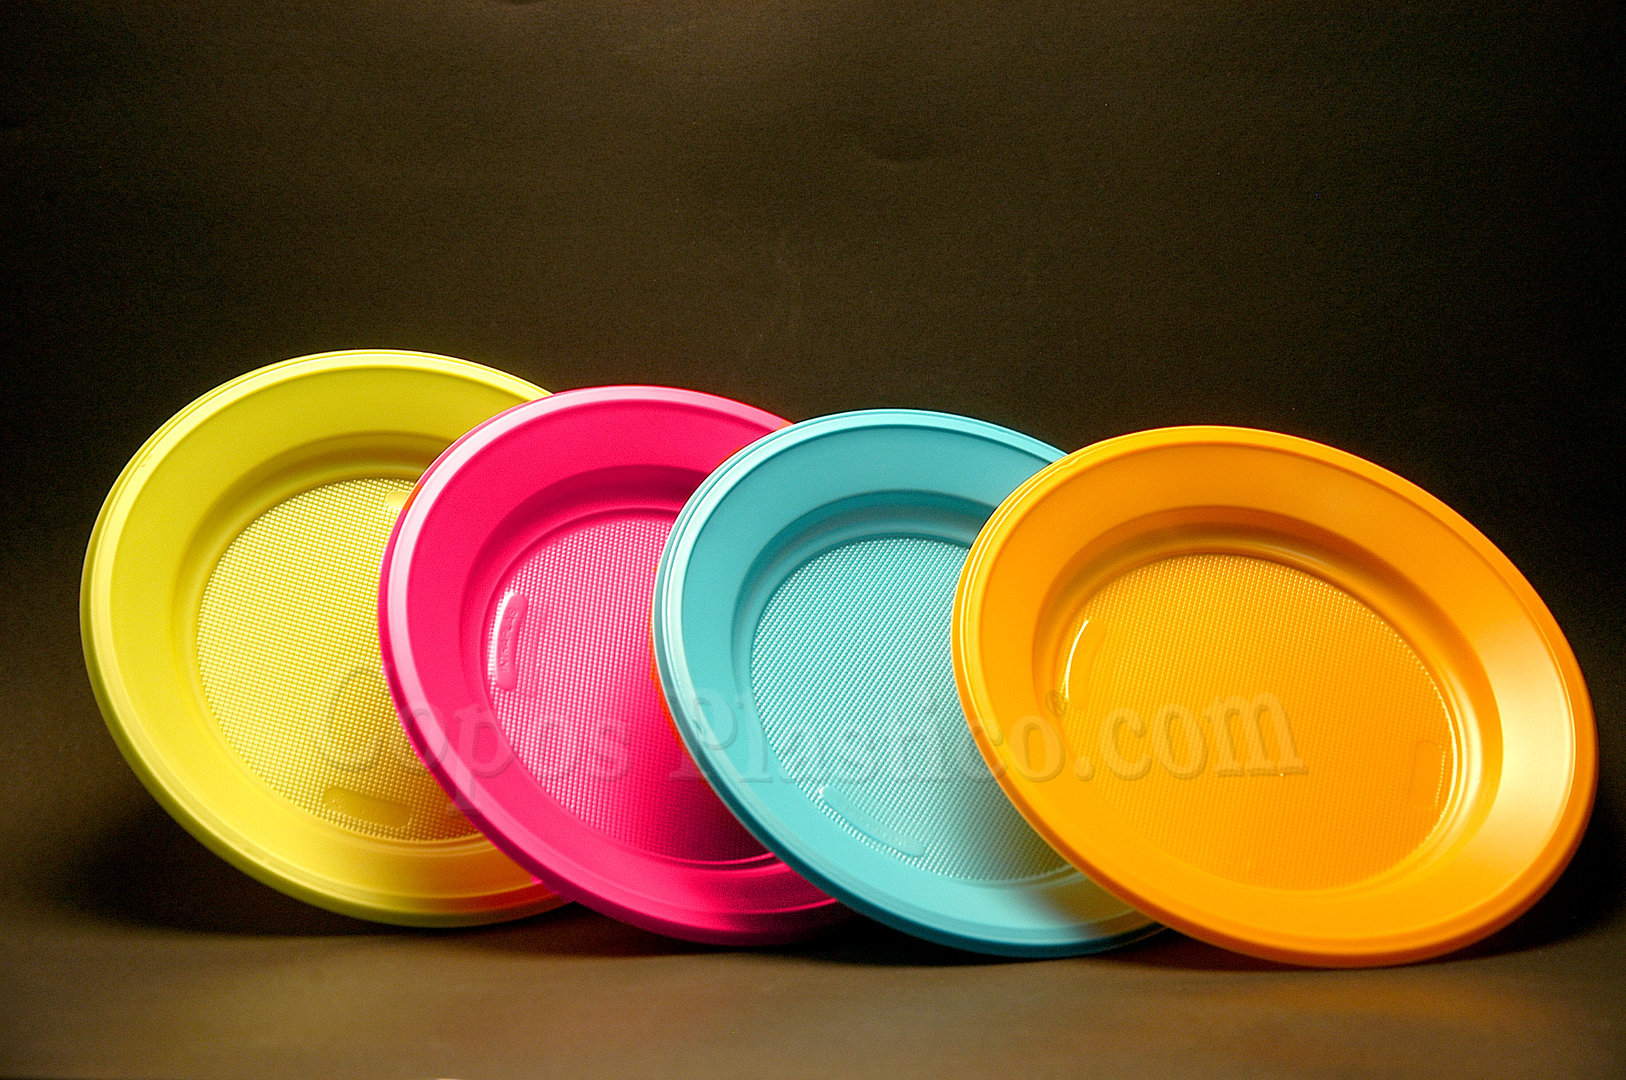 platos plasticos desechables – Compra platos plasticos desechables